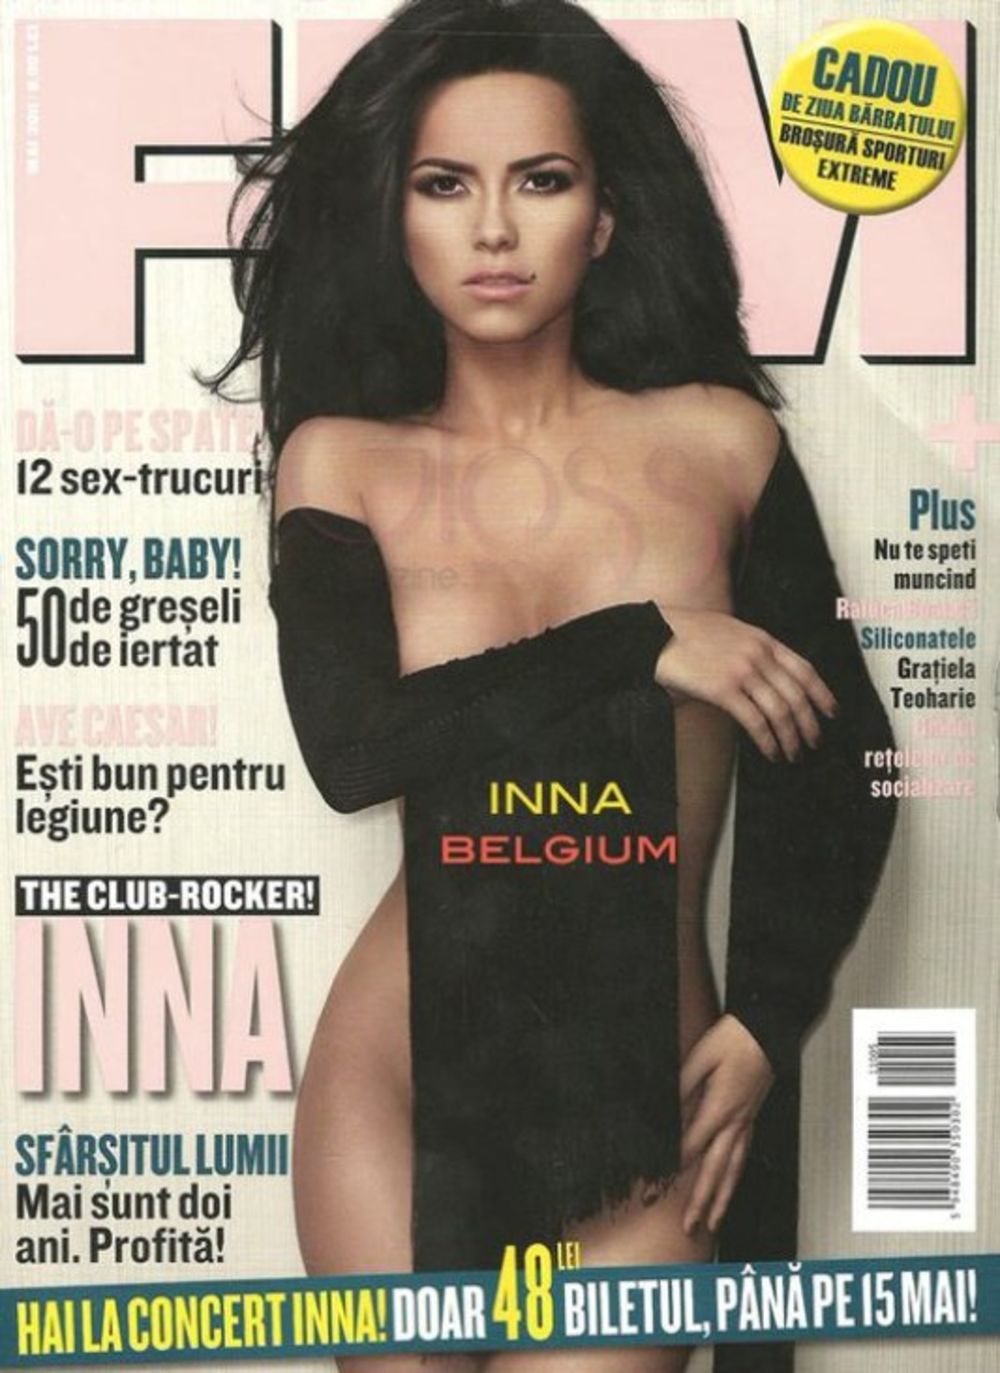 Zgodna pevačica Inna pokazala je svoje atribute u majskom izdanju magazina FHM koje se plasira na rumunsko tržište. Zvezda dance i house muzičke scene pre tri godine izdala je prvi singl Hot, nakon čega je počeo njen uspon u karijeri, atraktivna dama obradovać